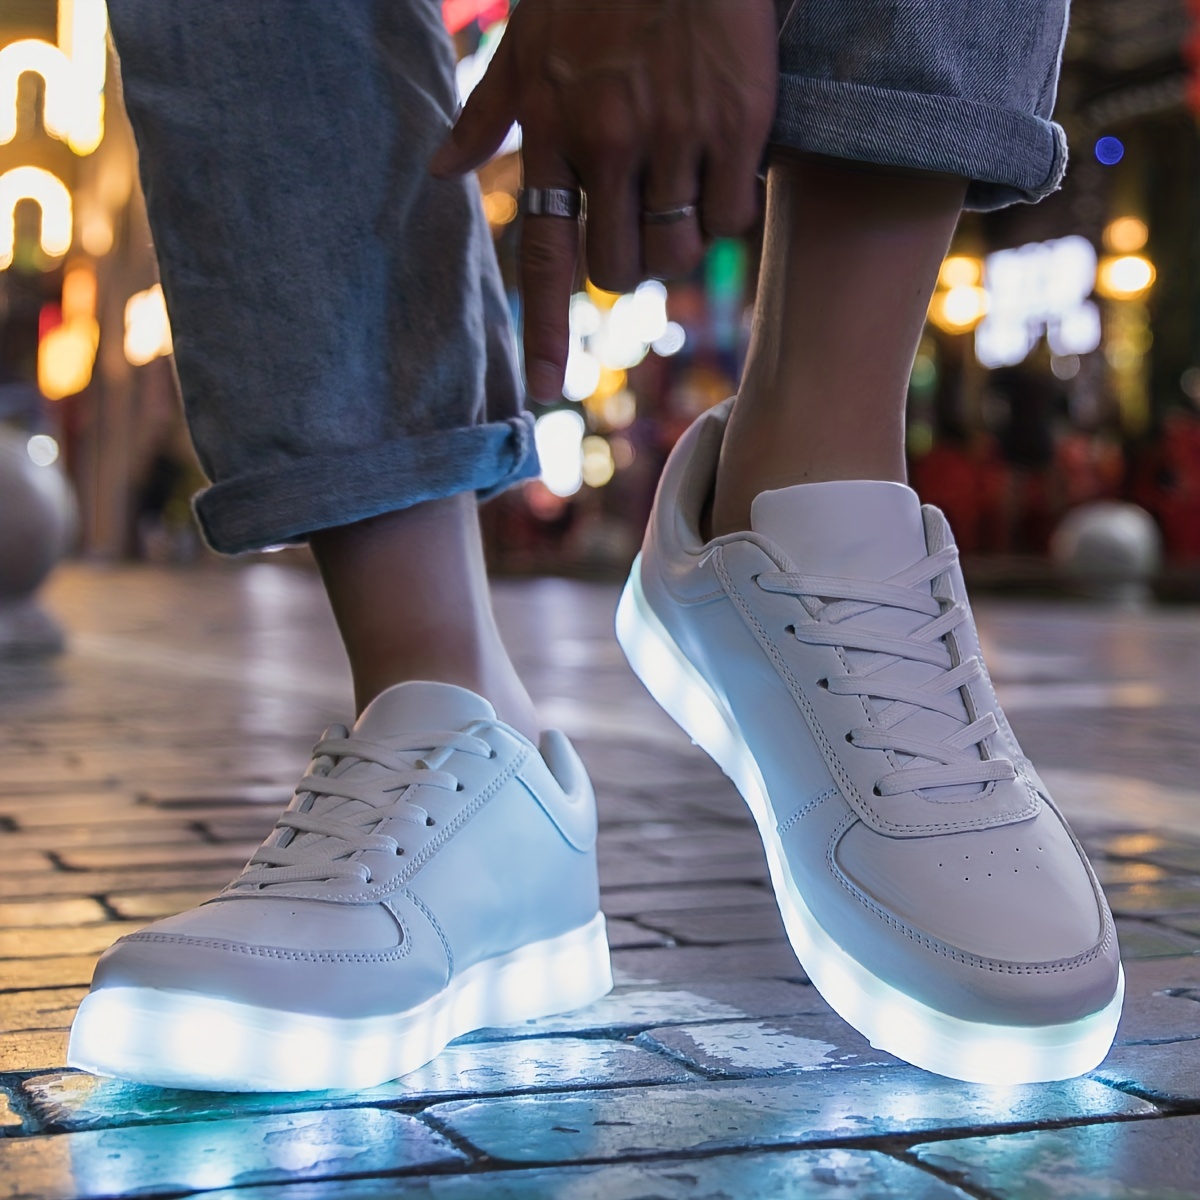 PYYIQI LED Light Up Shoes for Women Men Sports LED